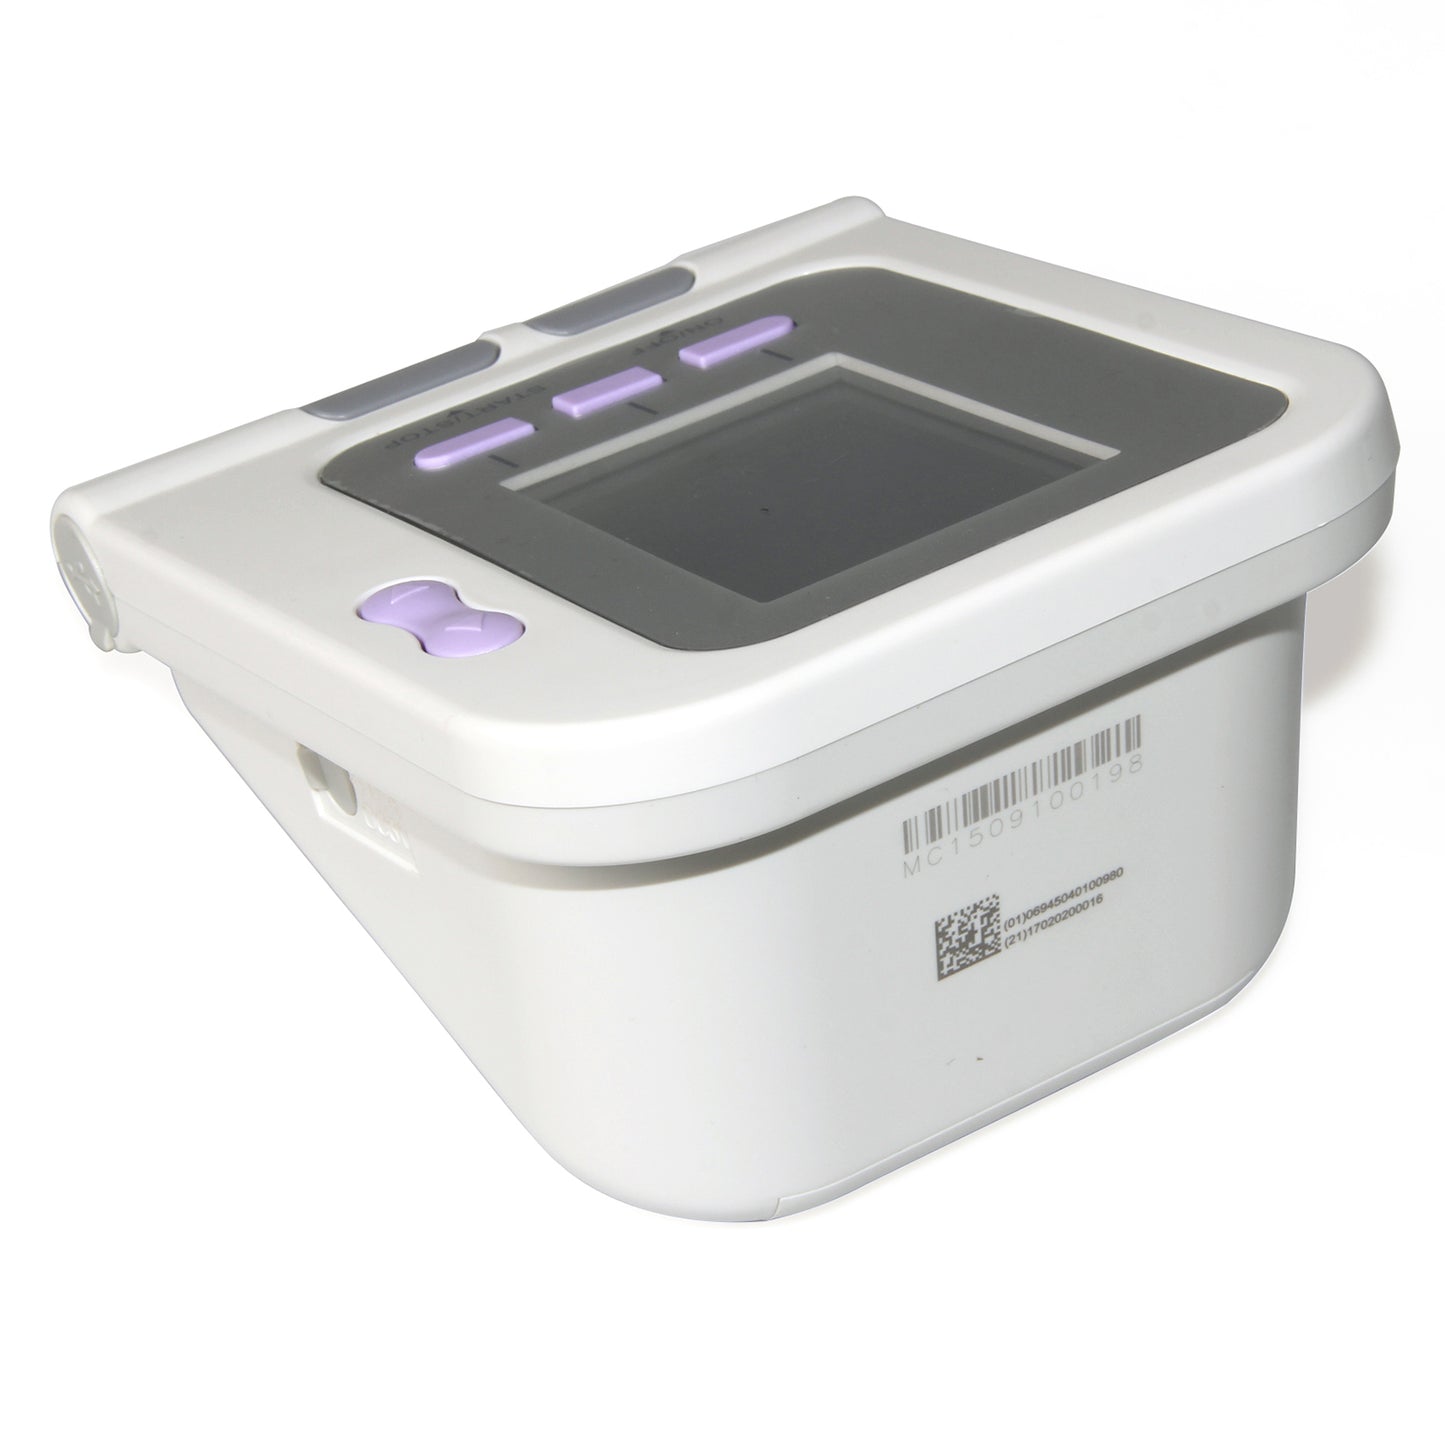 CONTEC08A VET Digital Veterinary Blood Pressure Monitor NIBP SP02 PC Software Dog Cat - MediaEclat.store